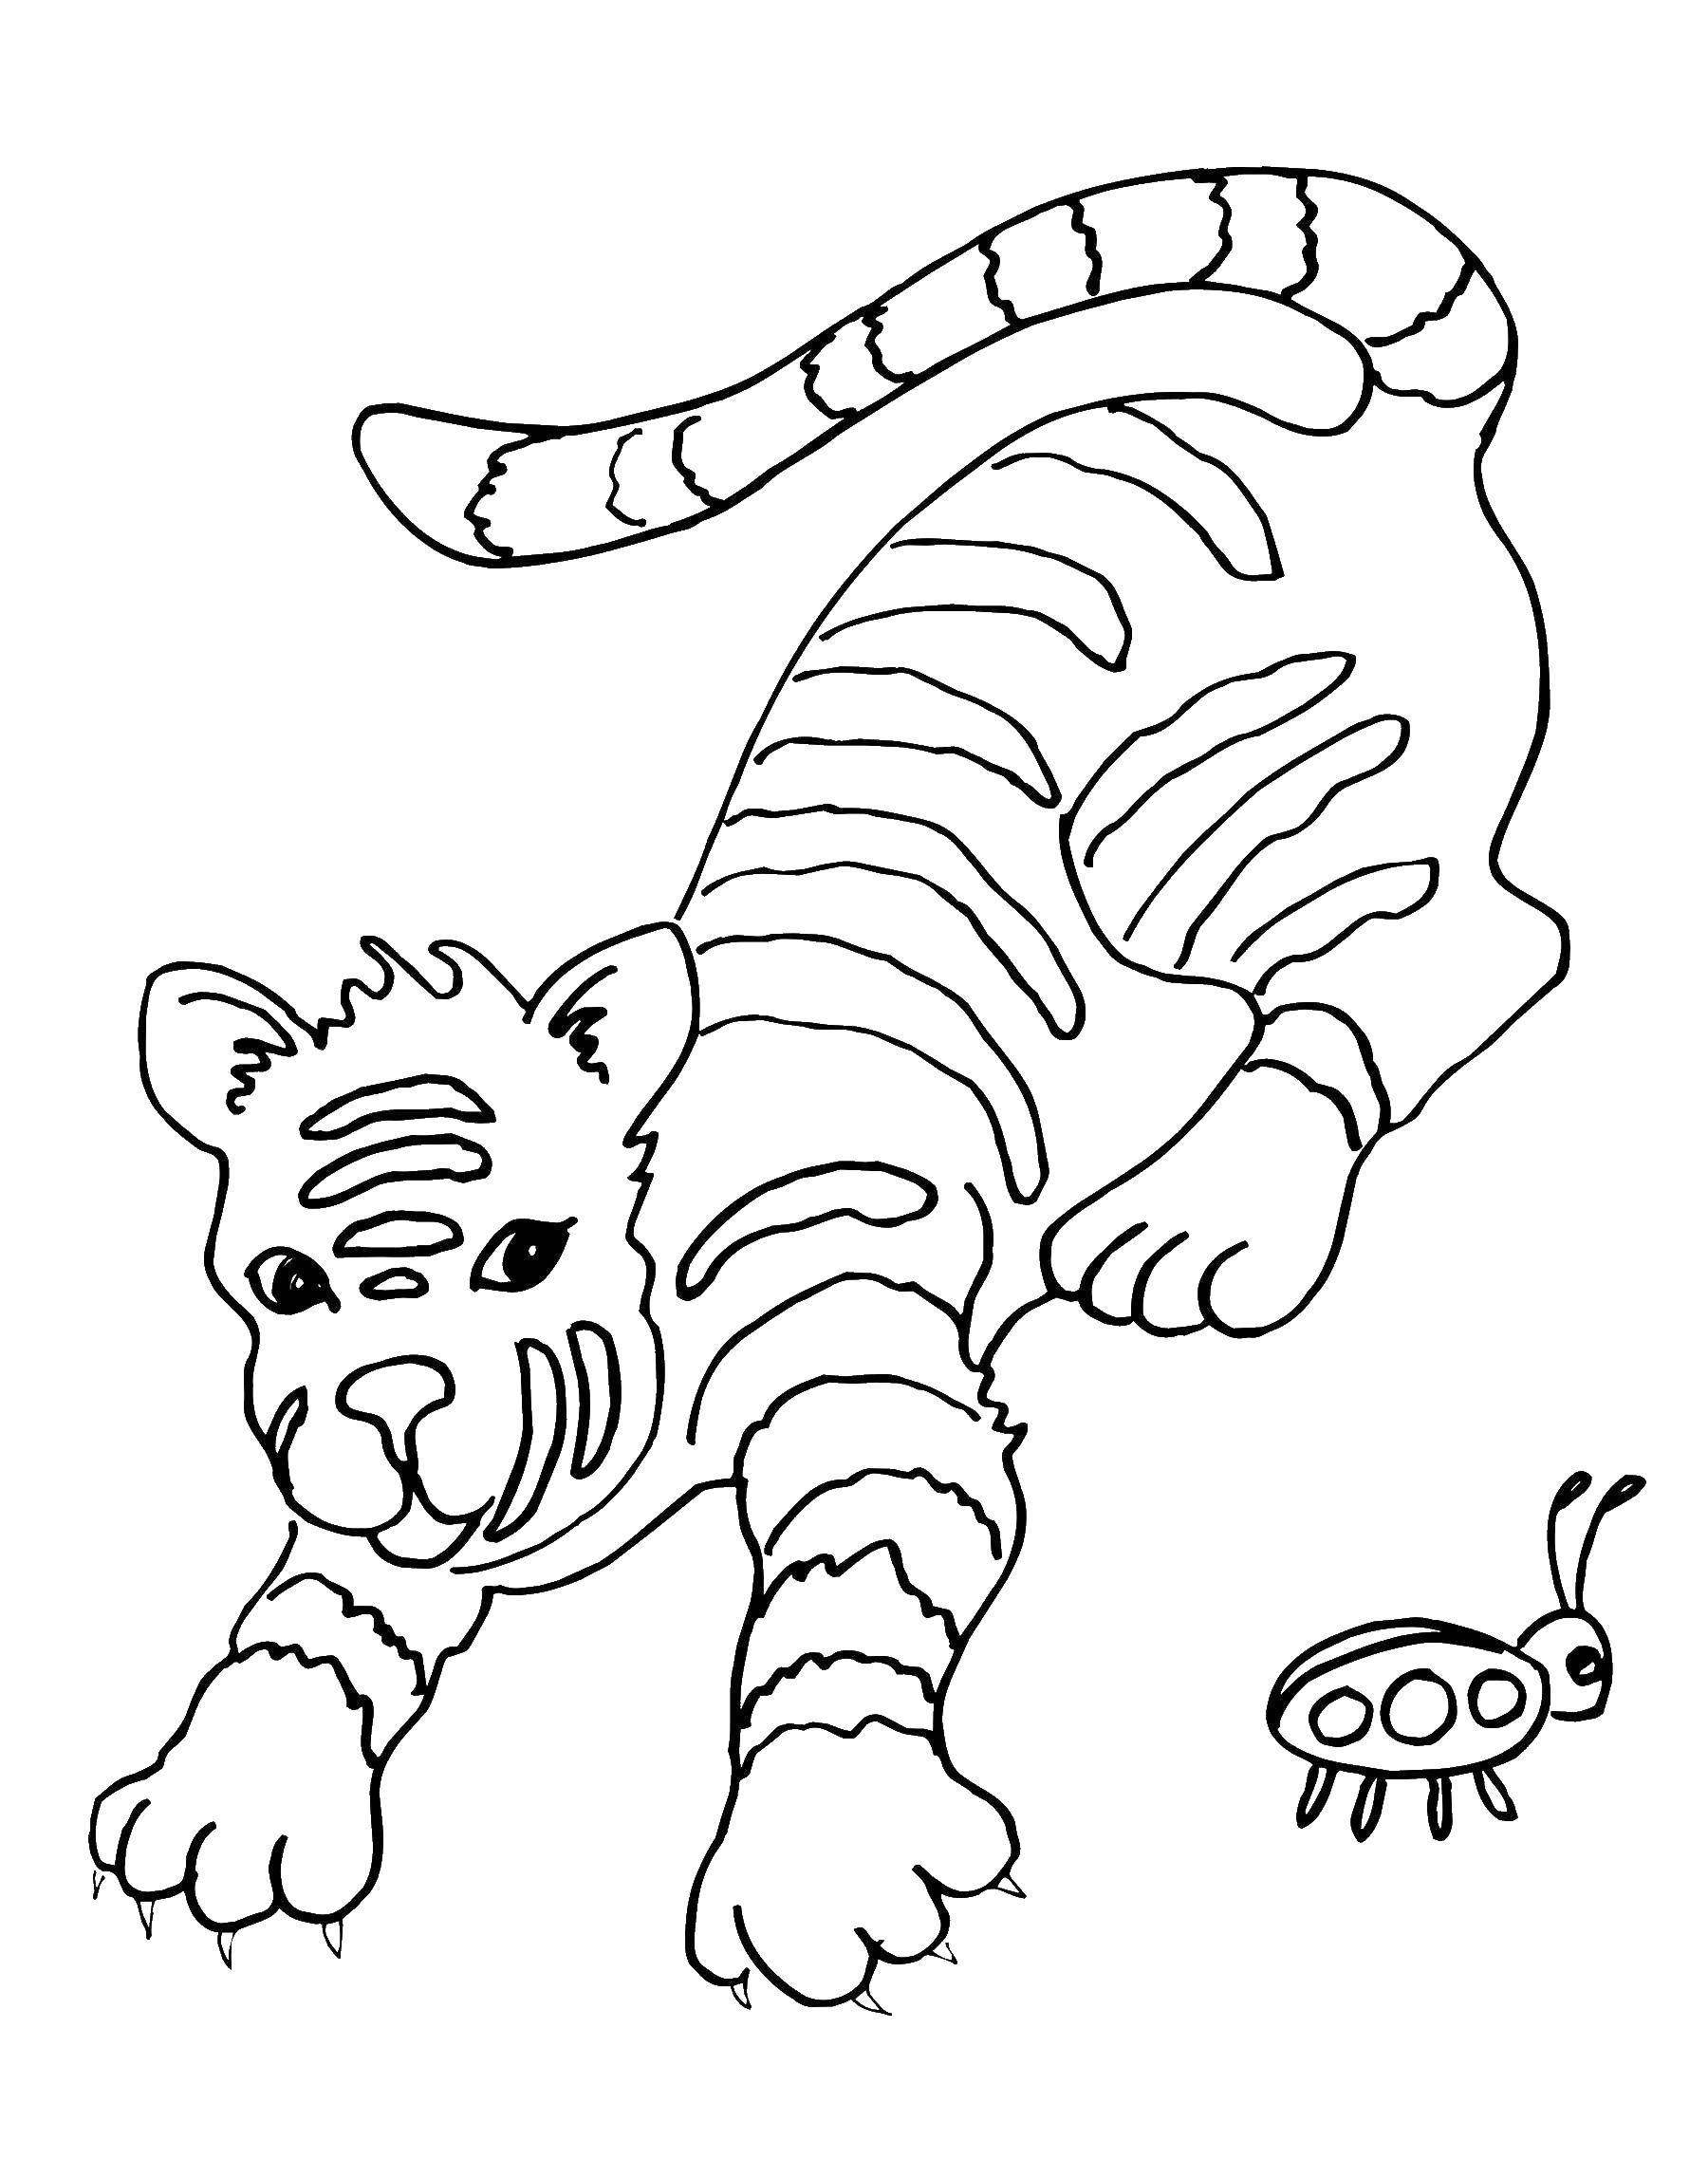 Розмальовки  Смугастий тигр грає з сонечком. Завантажити розмальовку смугастий тигр, .  Роздрукувати ,Тварини,